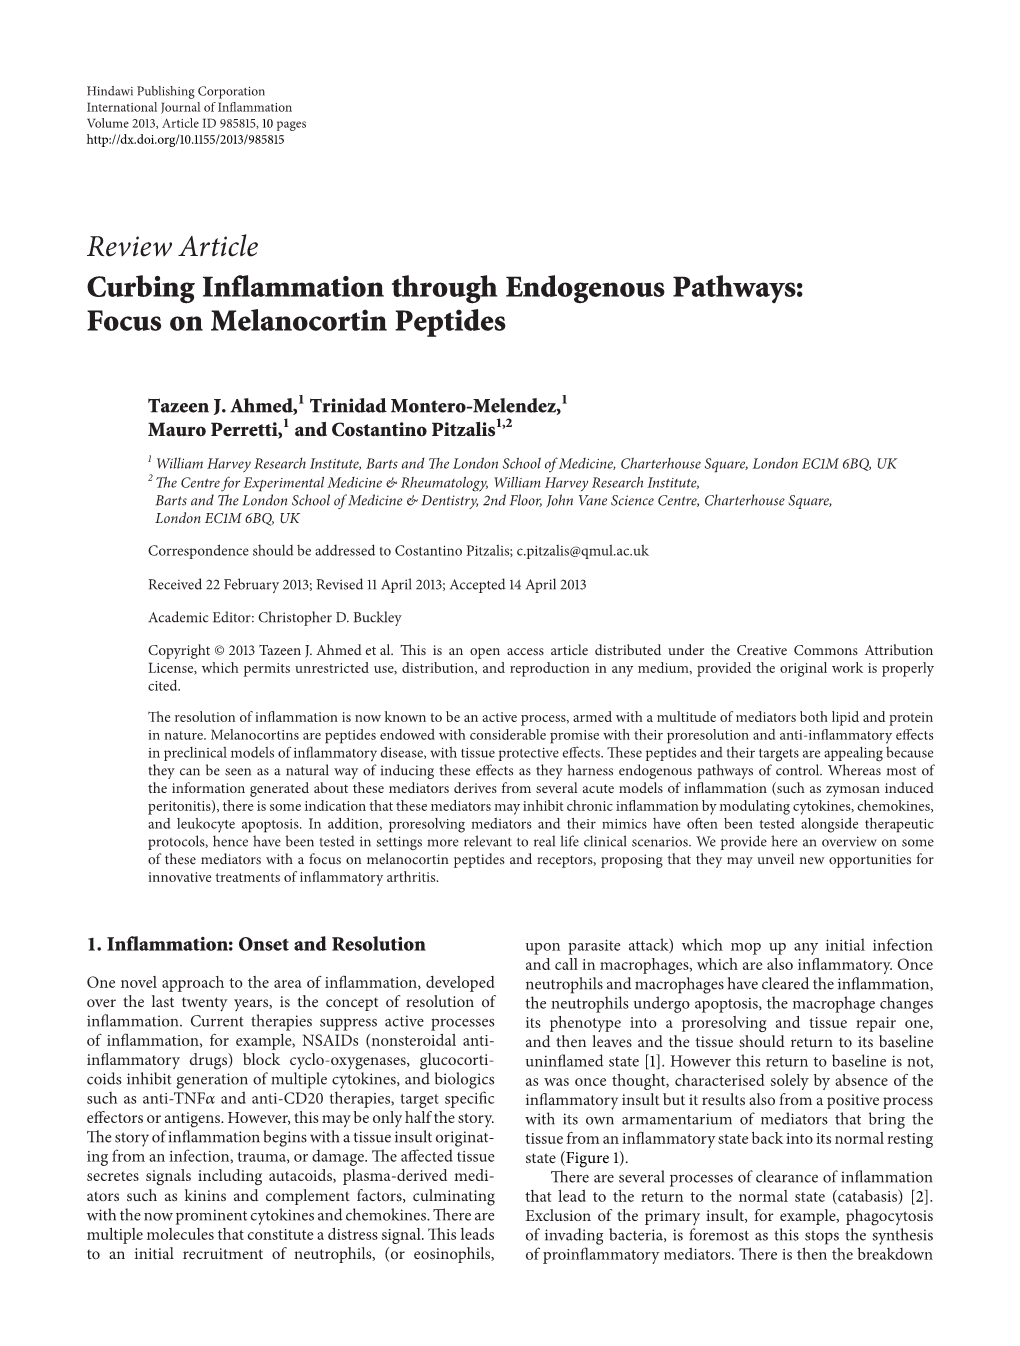 Curbing Inflammation Through Endogenous Pathways: Focus on Melanocortin Peptides